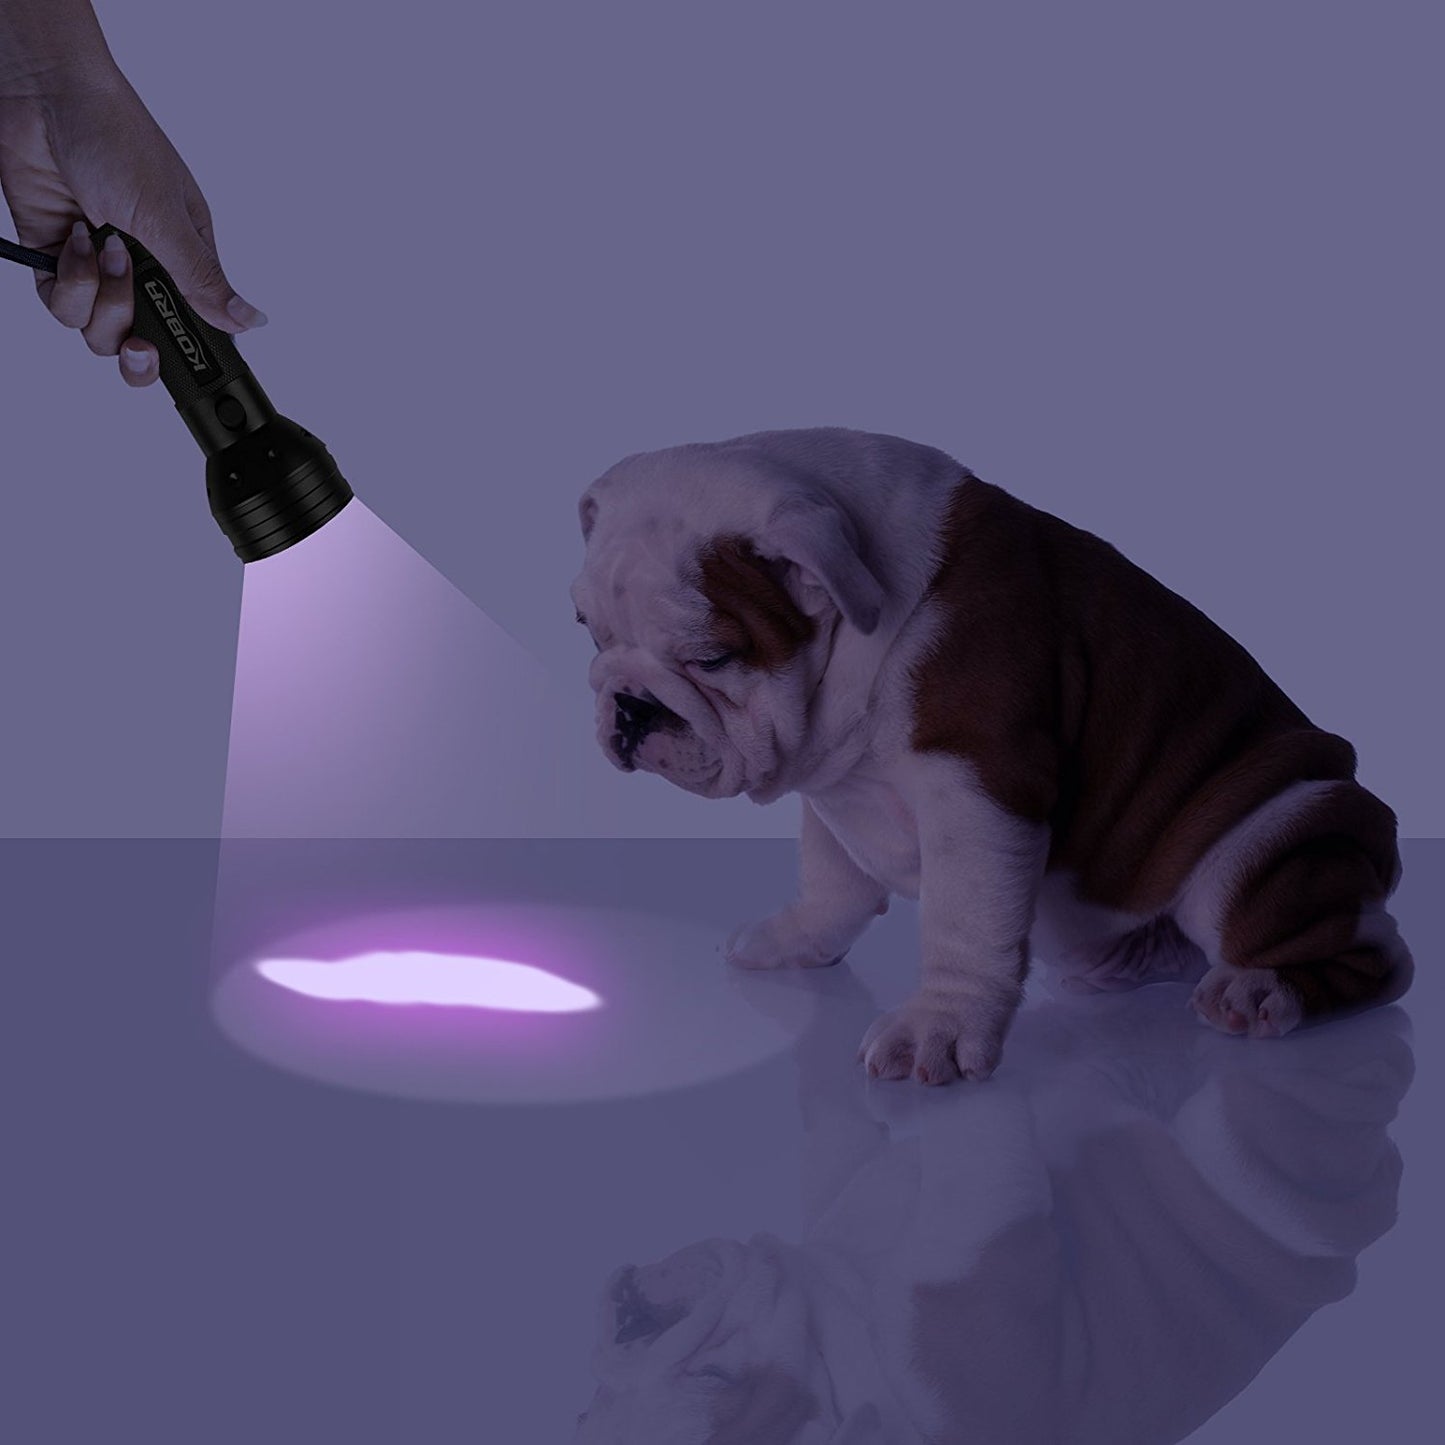 Kobra Black Light Flashlight - 100 LED UV Flashlight Black Light for Pet Urine Detection - Lamp and Blacklight for Home & Hotel Inspection - UV Light Flashlight Intensity 18W 385-395nm LEDs Scorpions